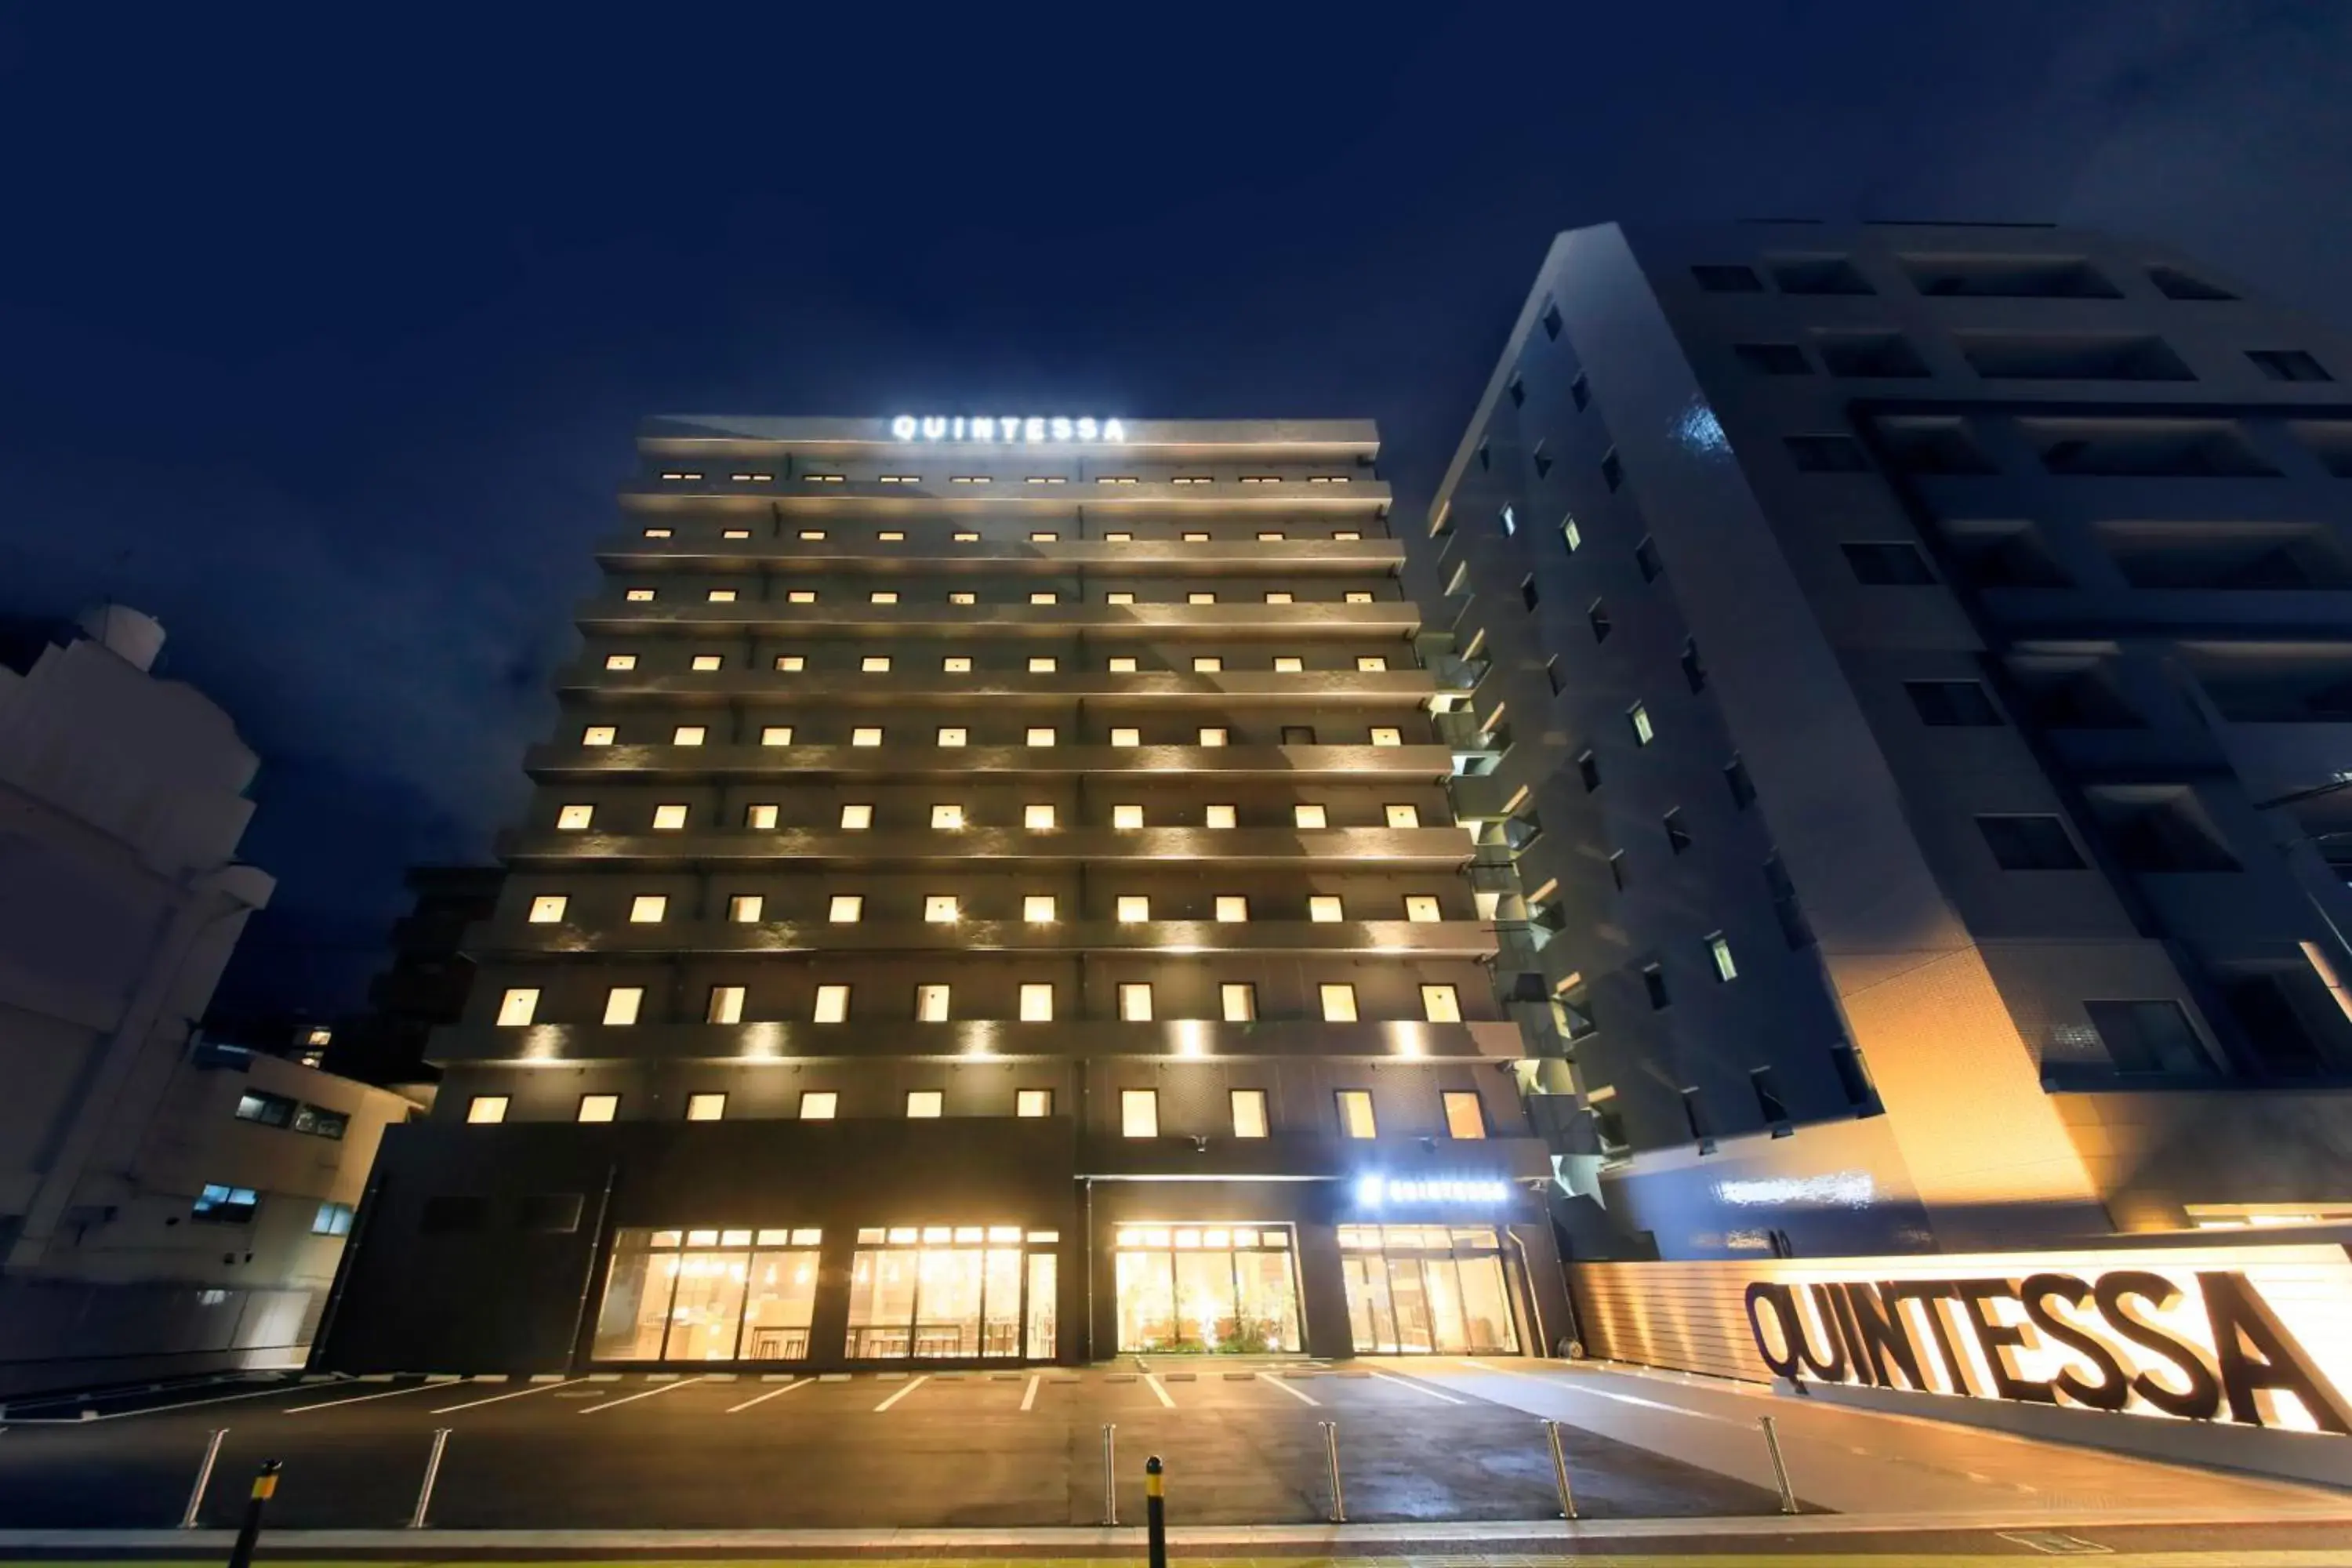 Property Building in Quintessa Hotel Fukuoka Tenjin Minami